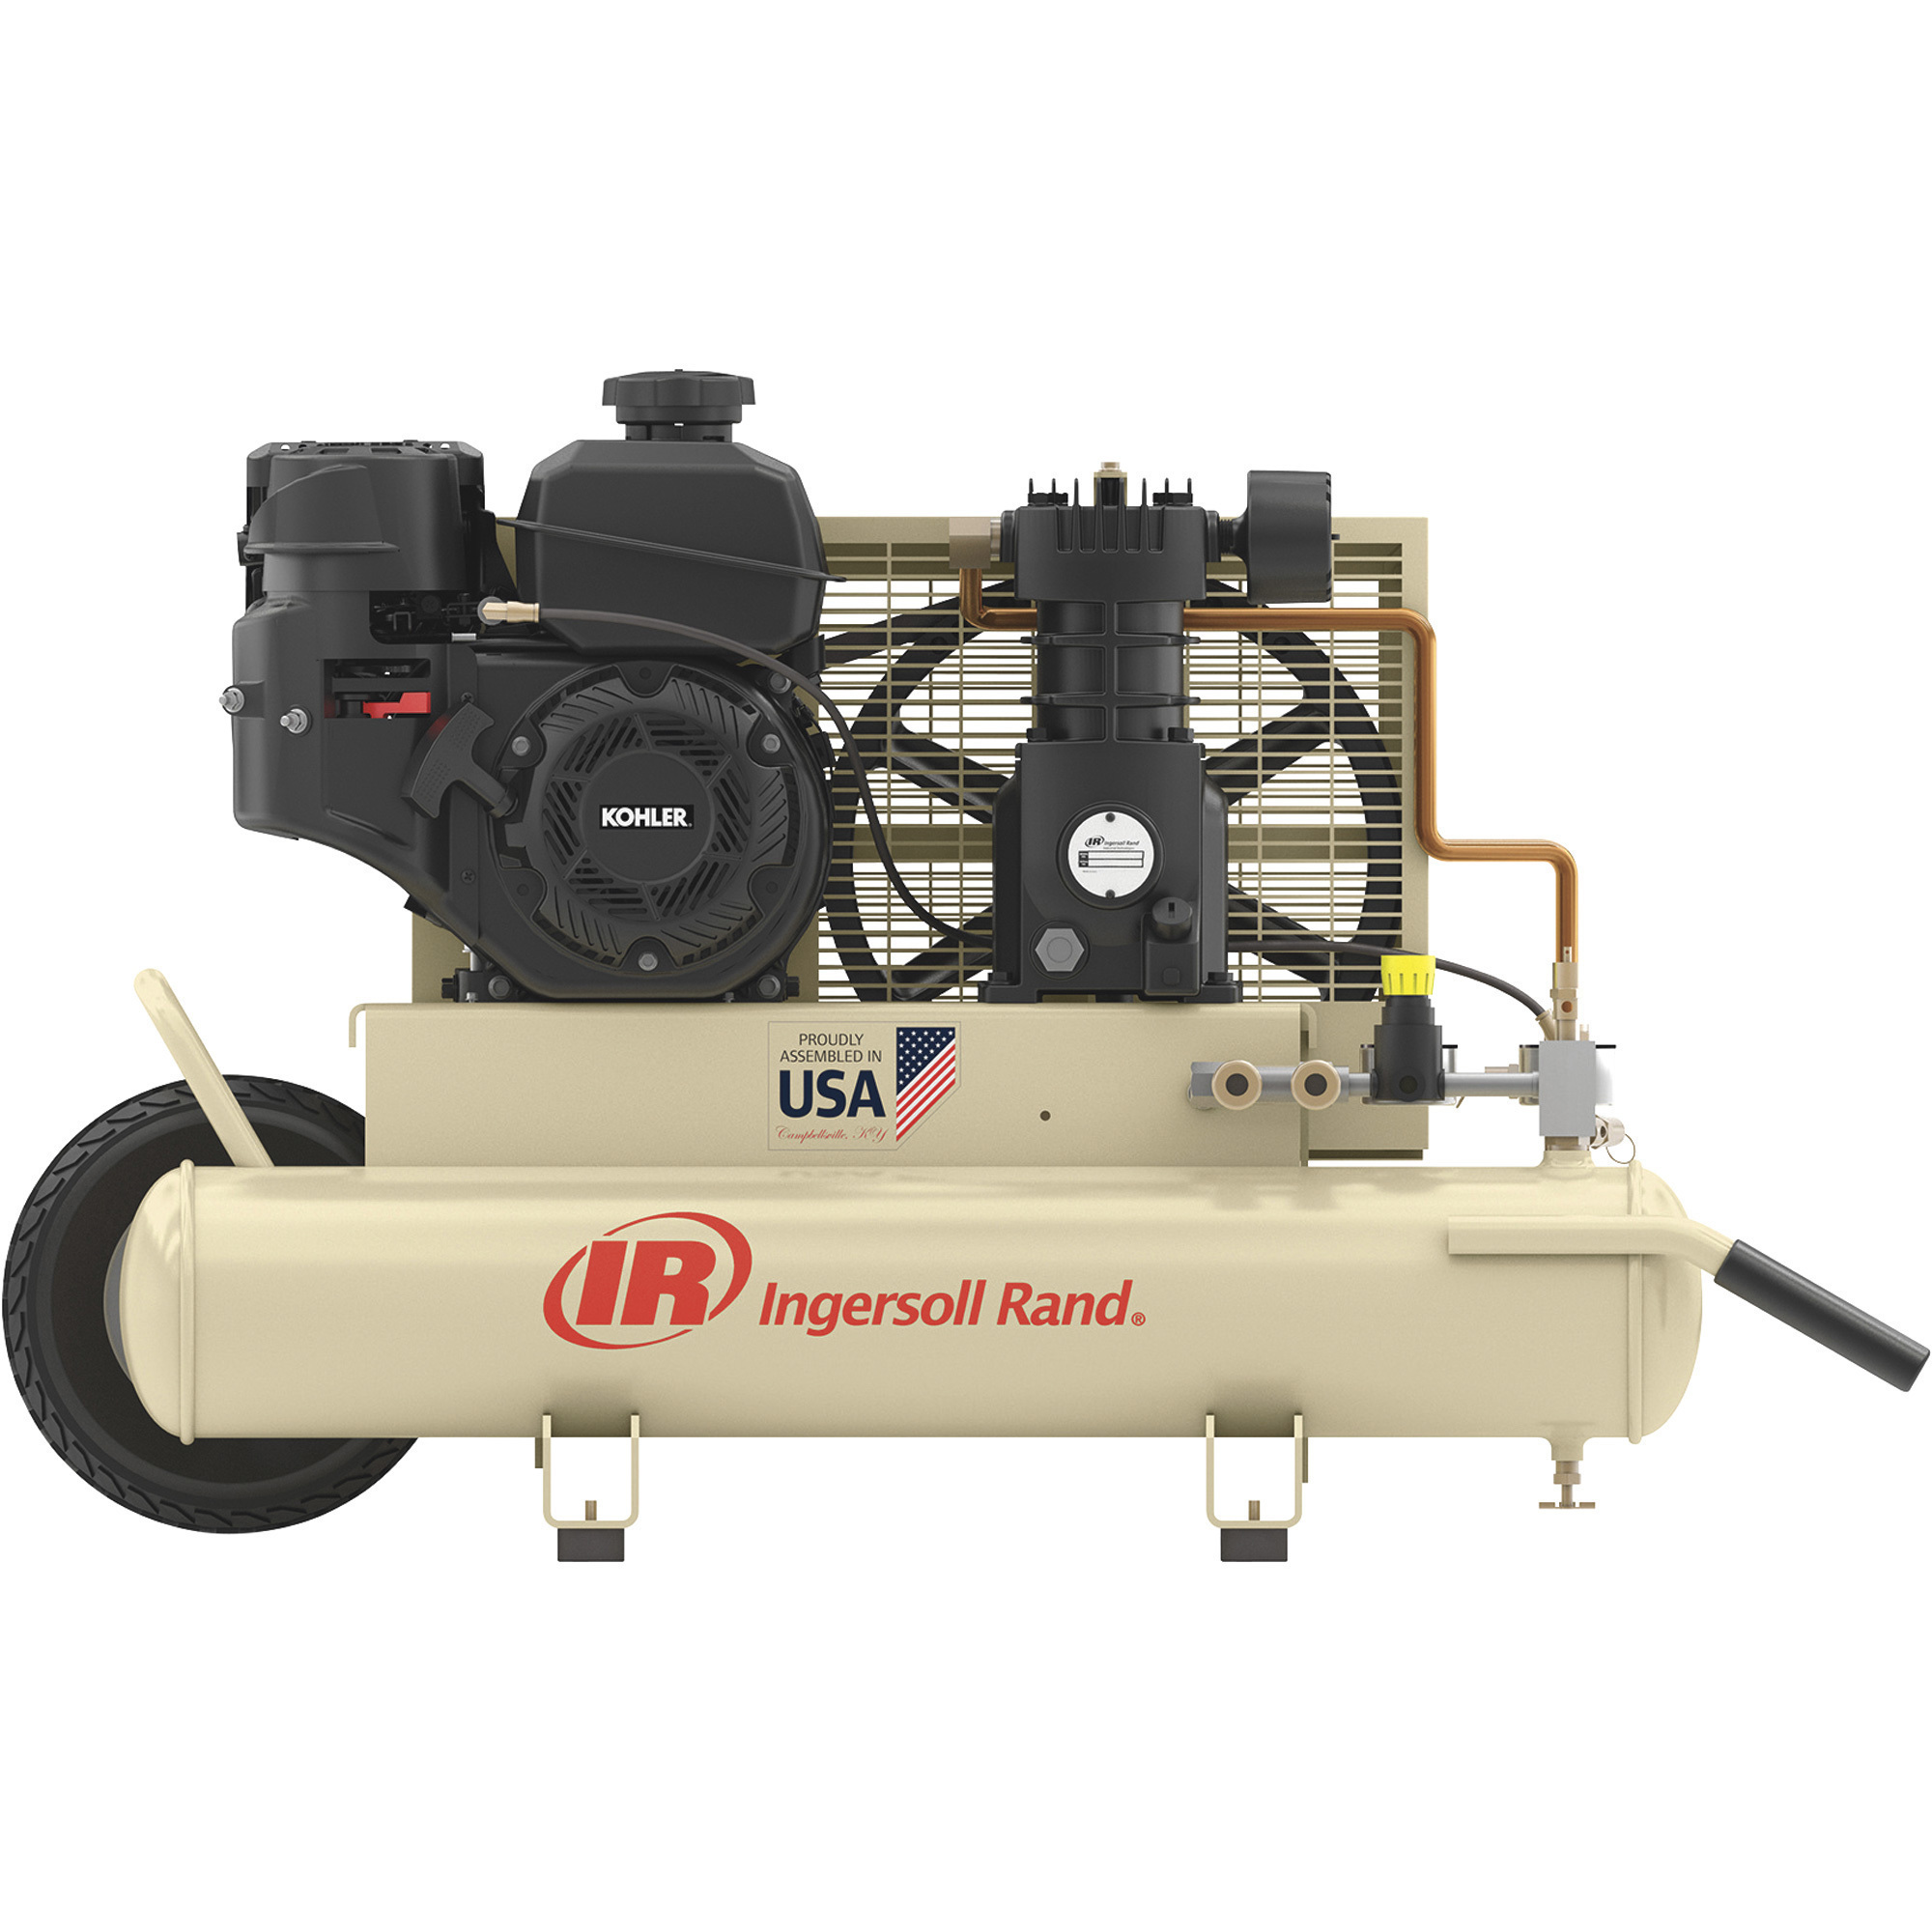 Ingersoll Rand Gas-Powered Portable Air Compressor, 5.5 HP Kohler Engine, 8 Gallons, 11.8 CFM @ 90 PSI, Model SS3J5.5GK-WB